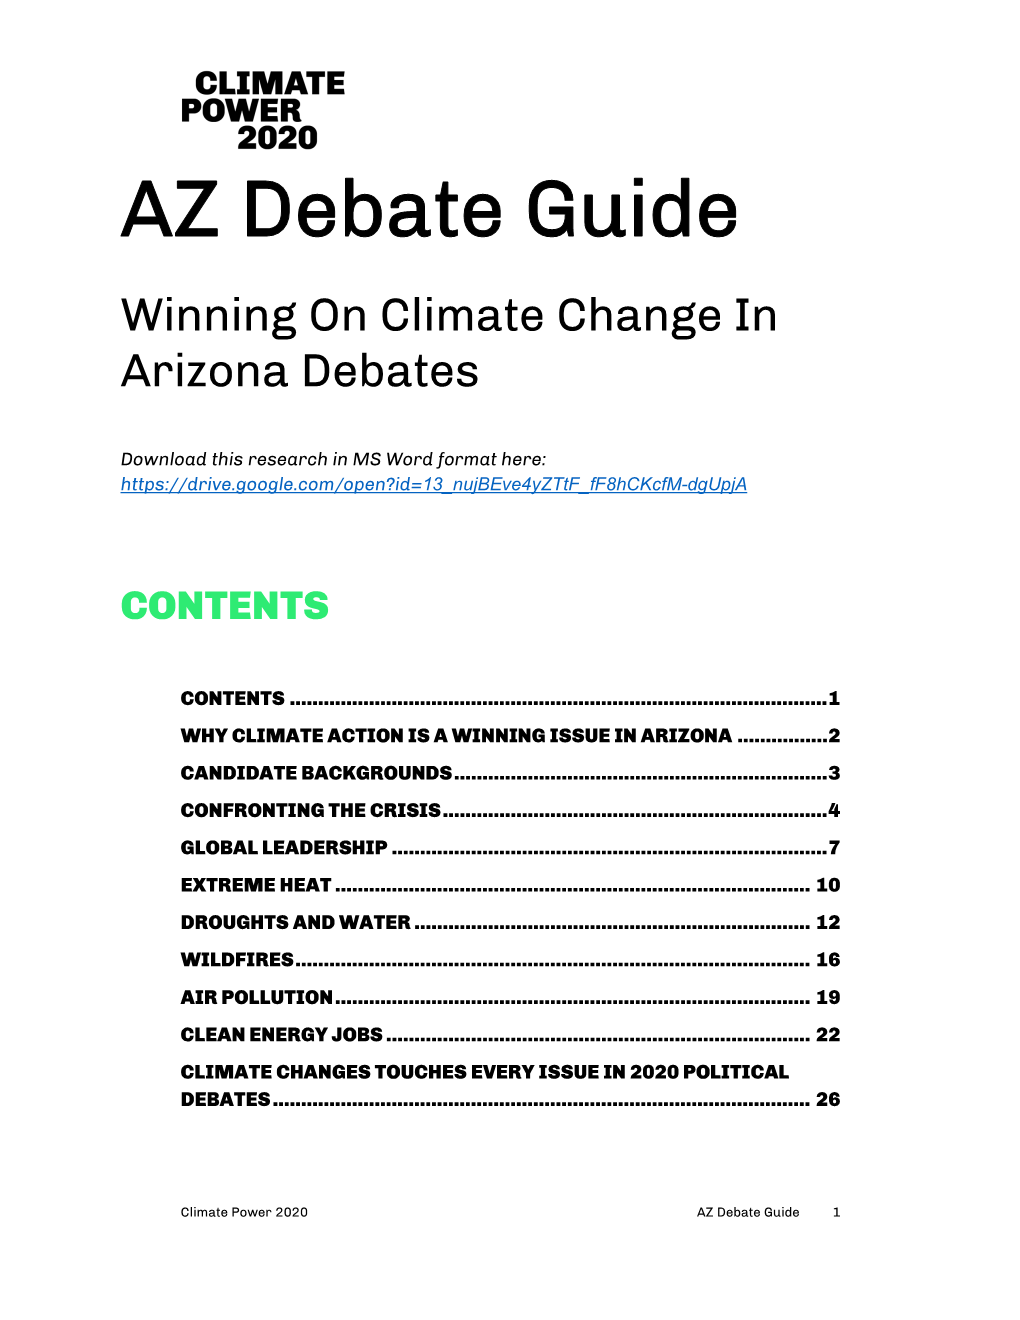 AZ Debate Guide Winning on Climate Change in Arizona Debates